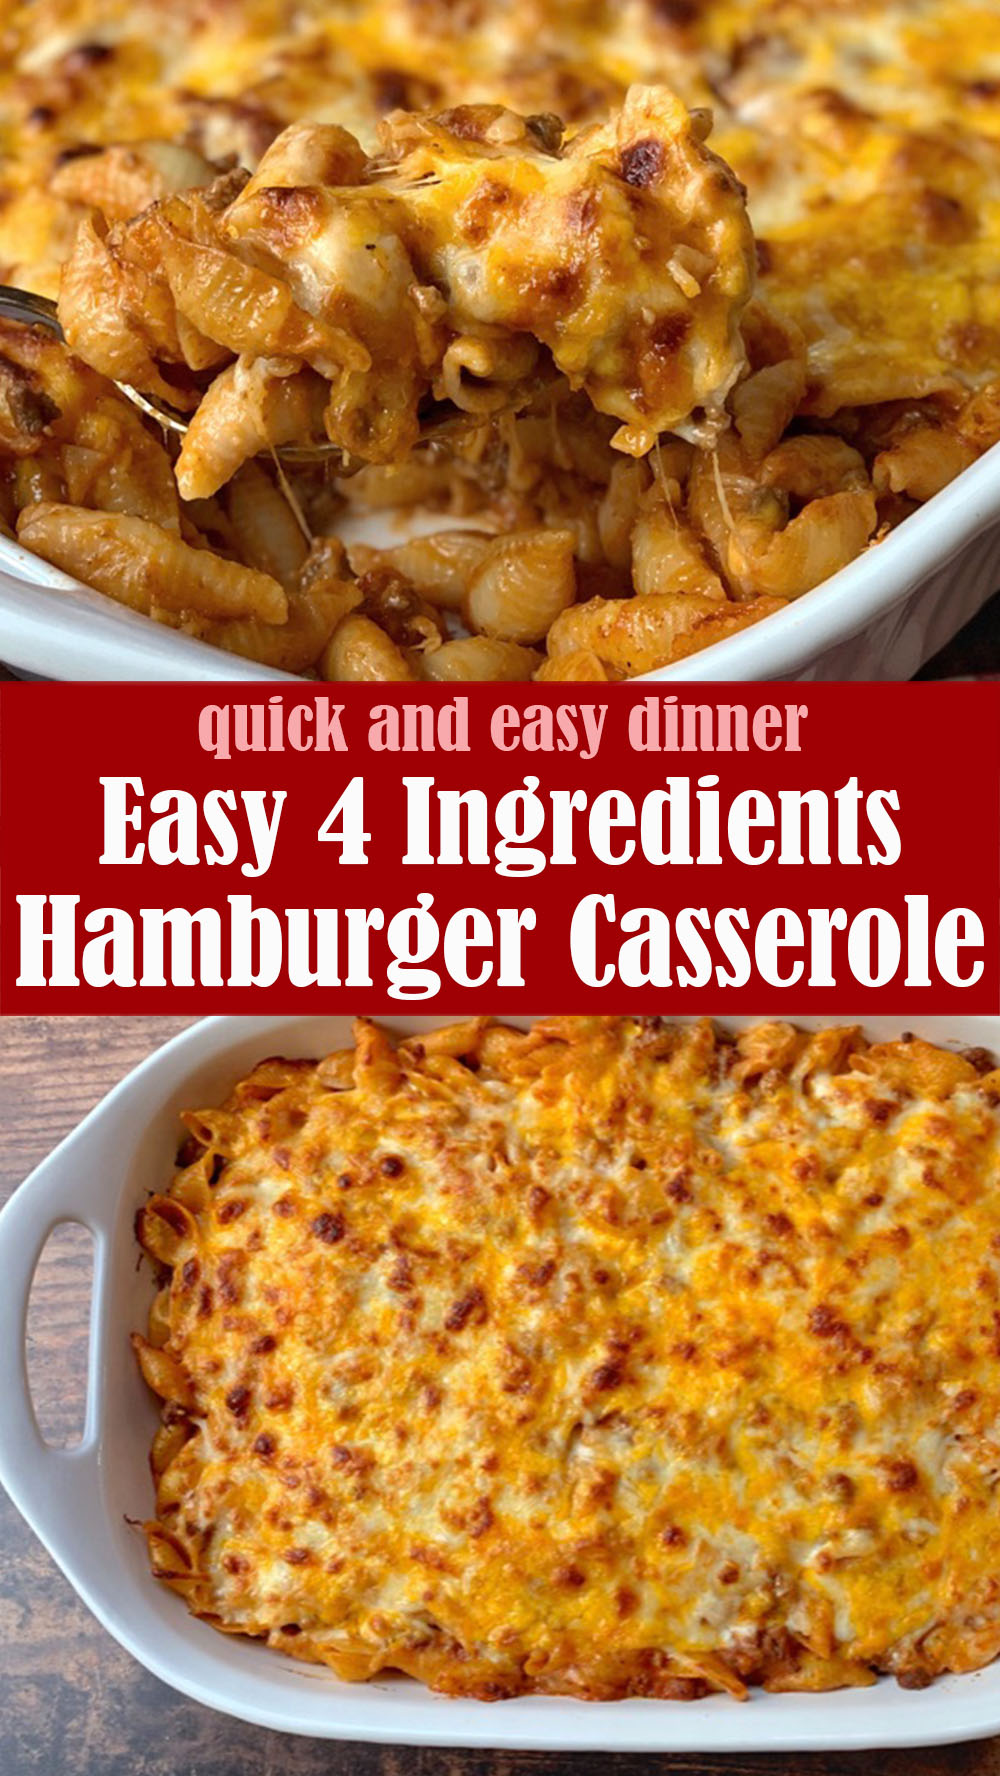 Easy 4 Ingredients Hamburger Casserole